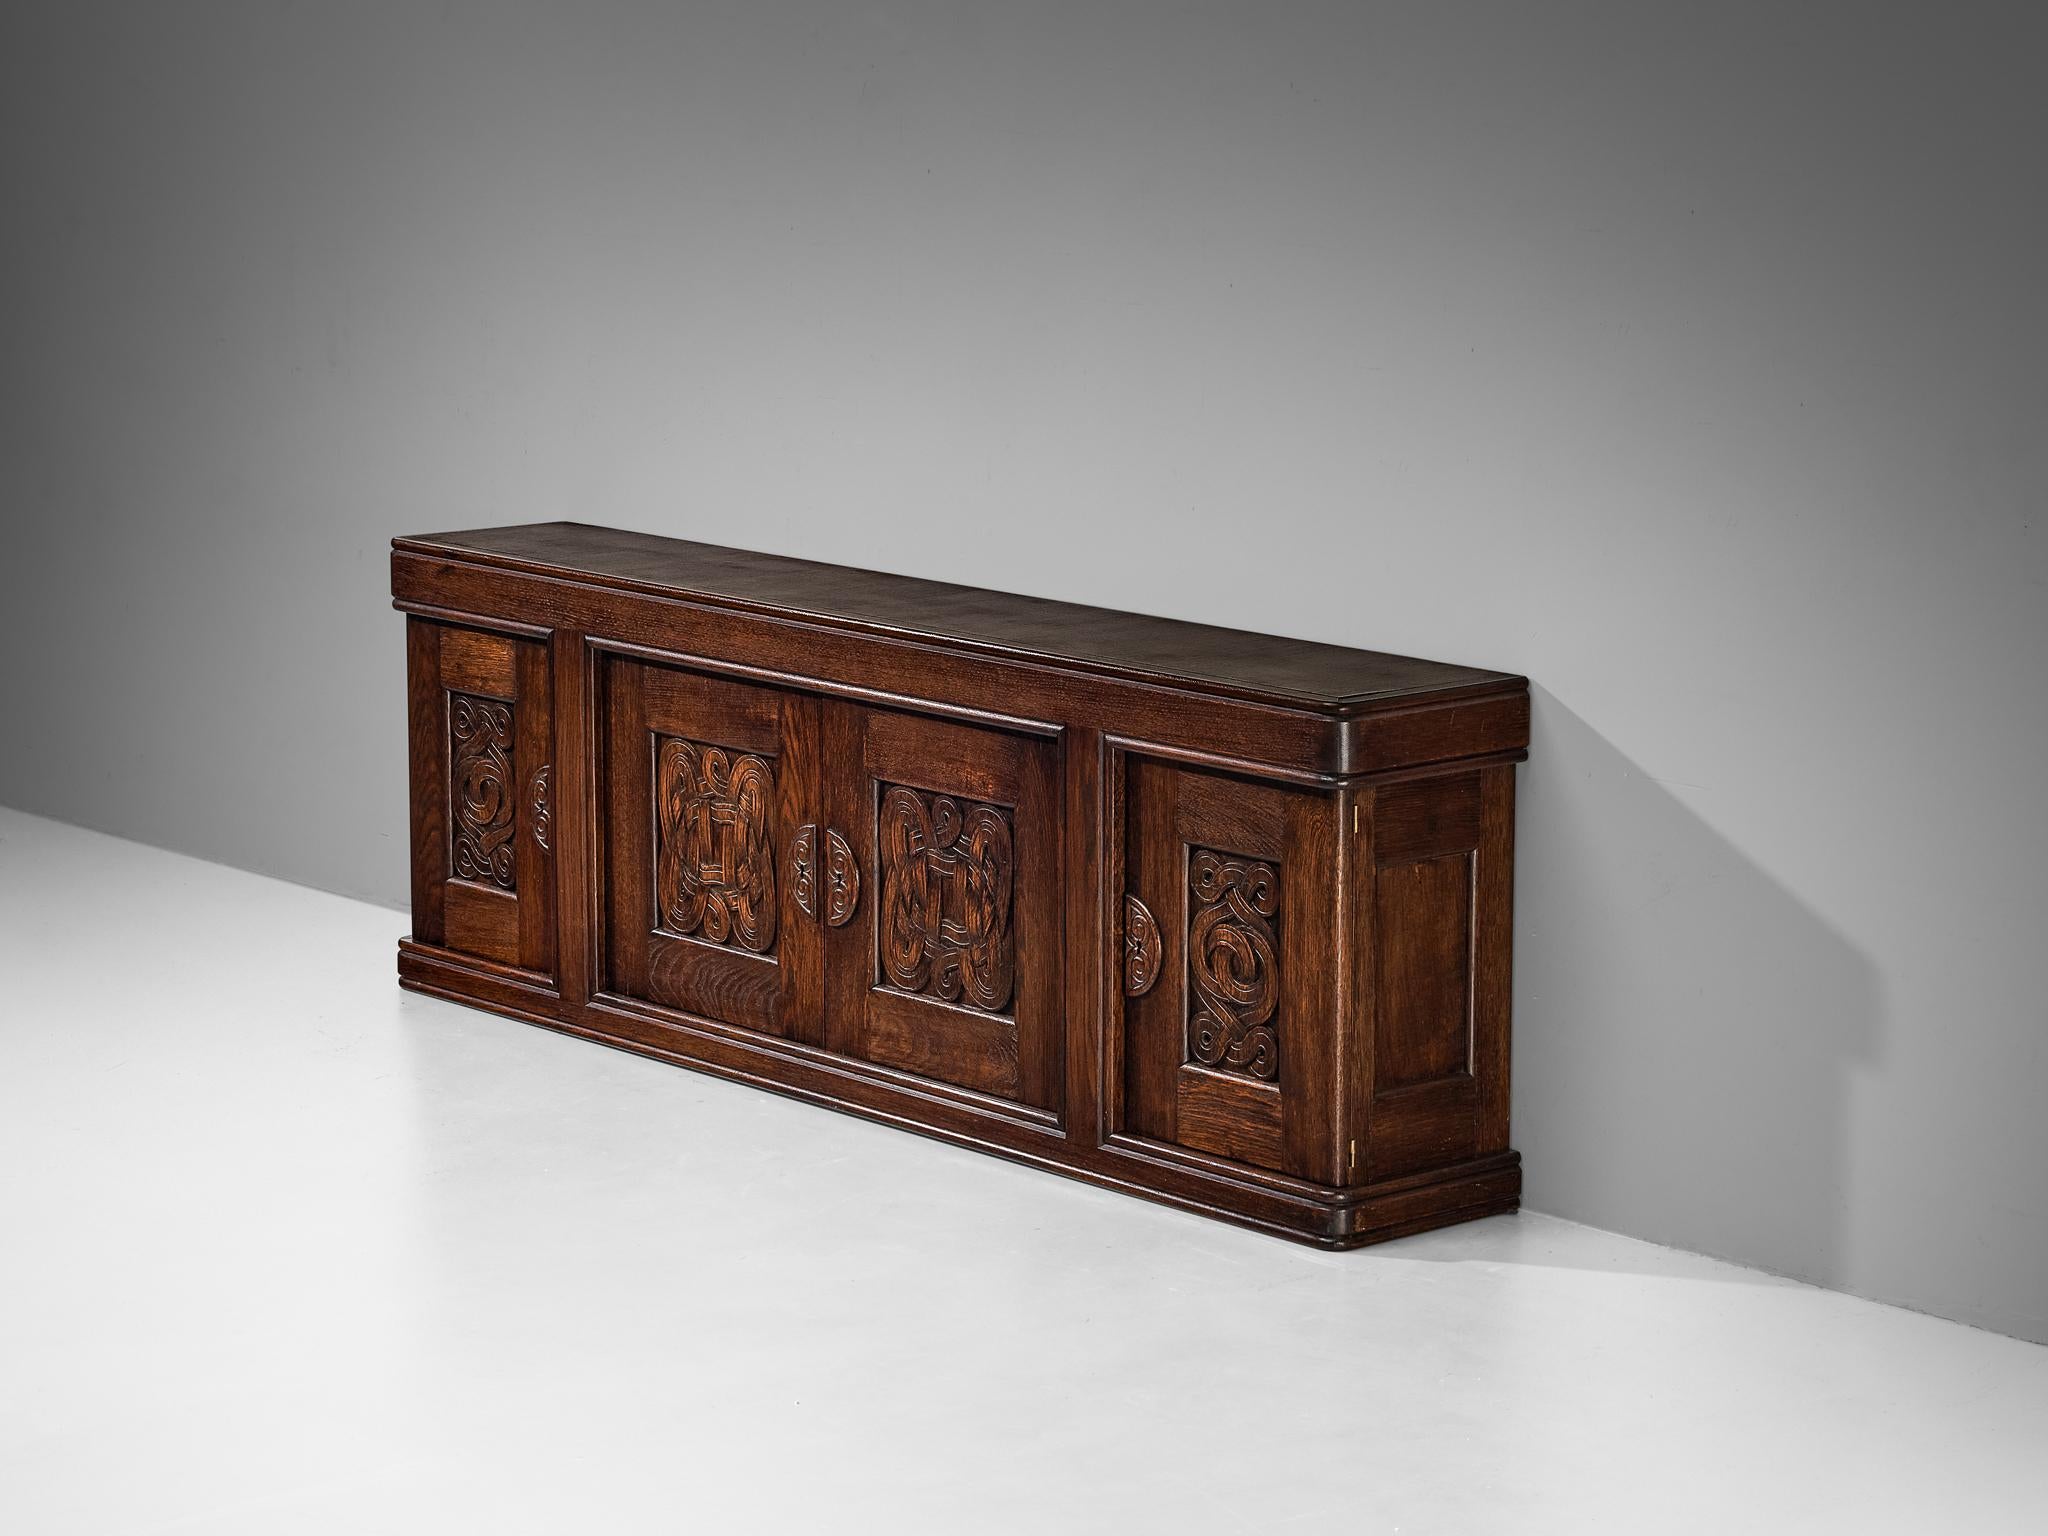 Joseph Savina Cabinet with Intricate Carvings in Oak